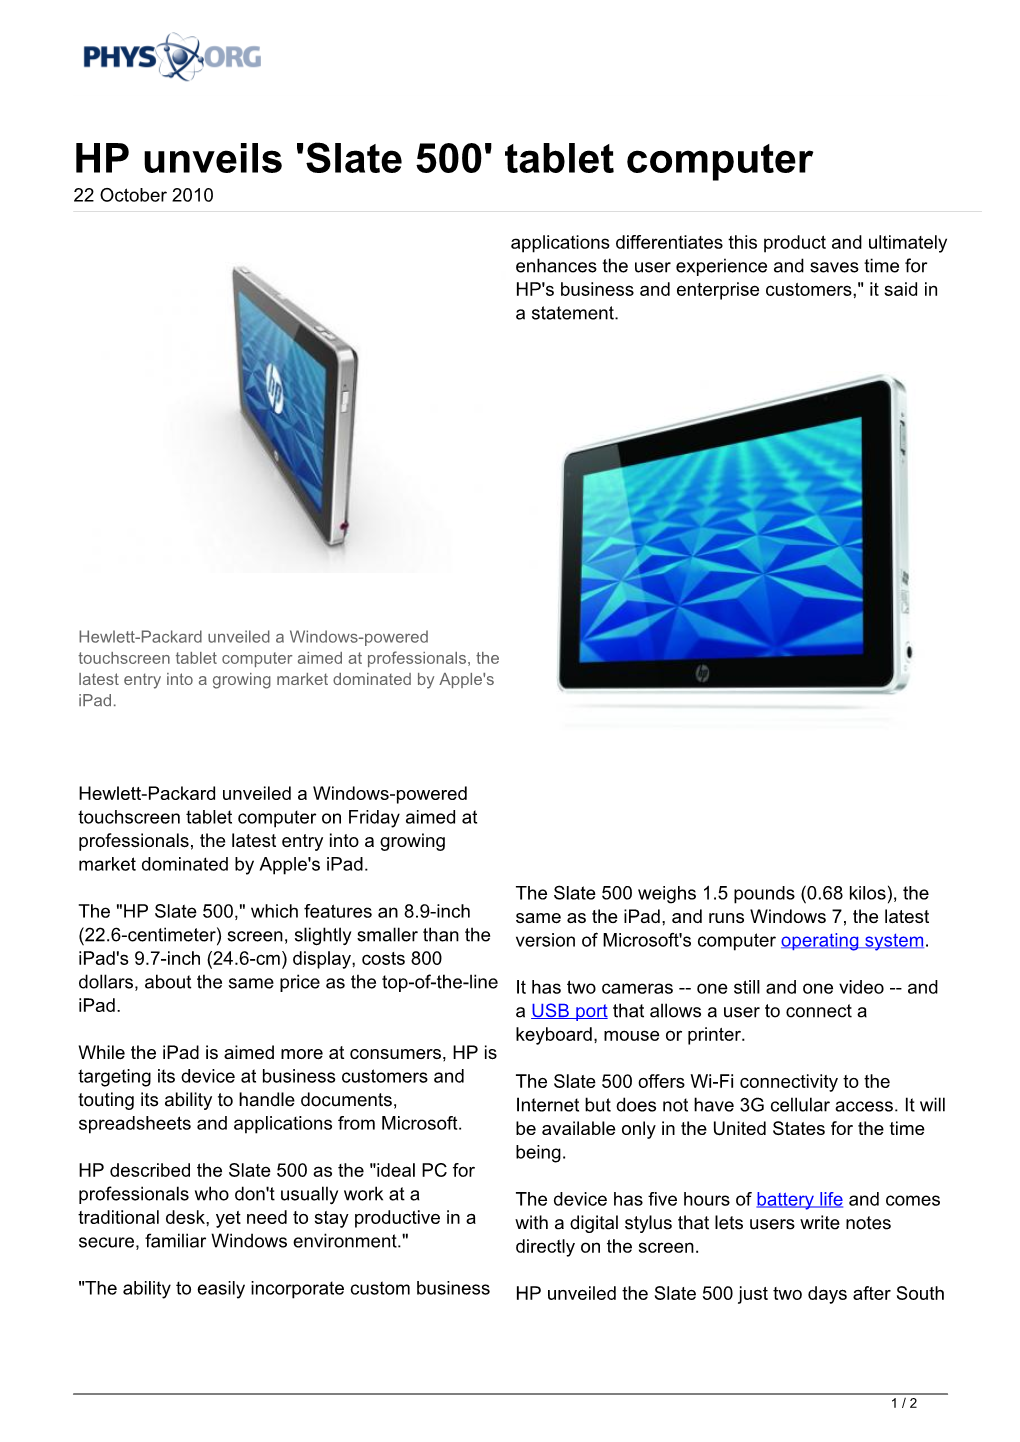 HP Unveils 'Slate 500' Tablet Computer 22 October 2010